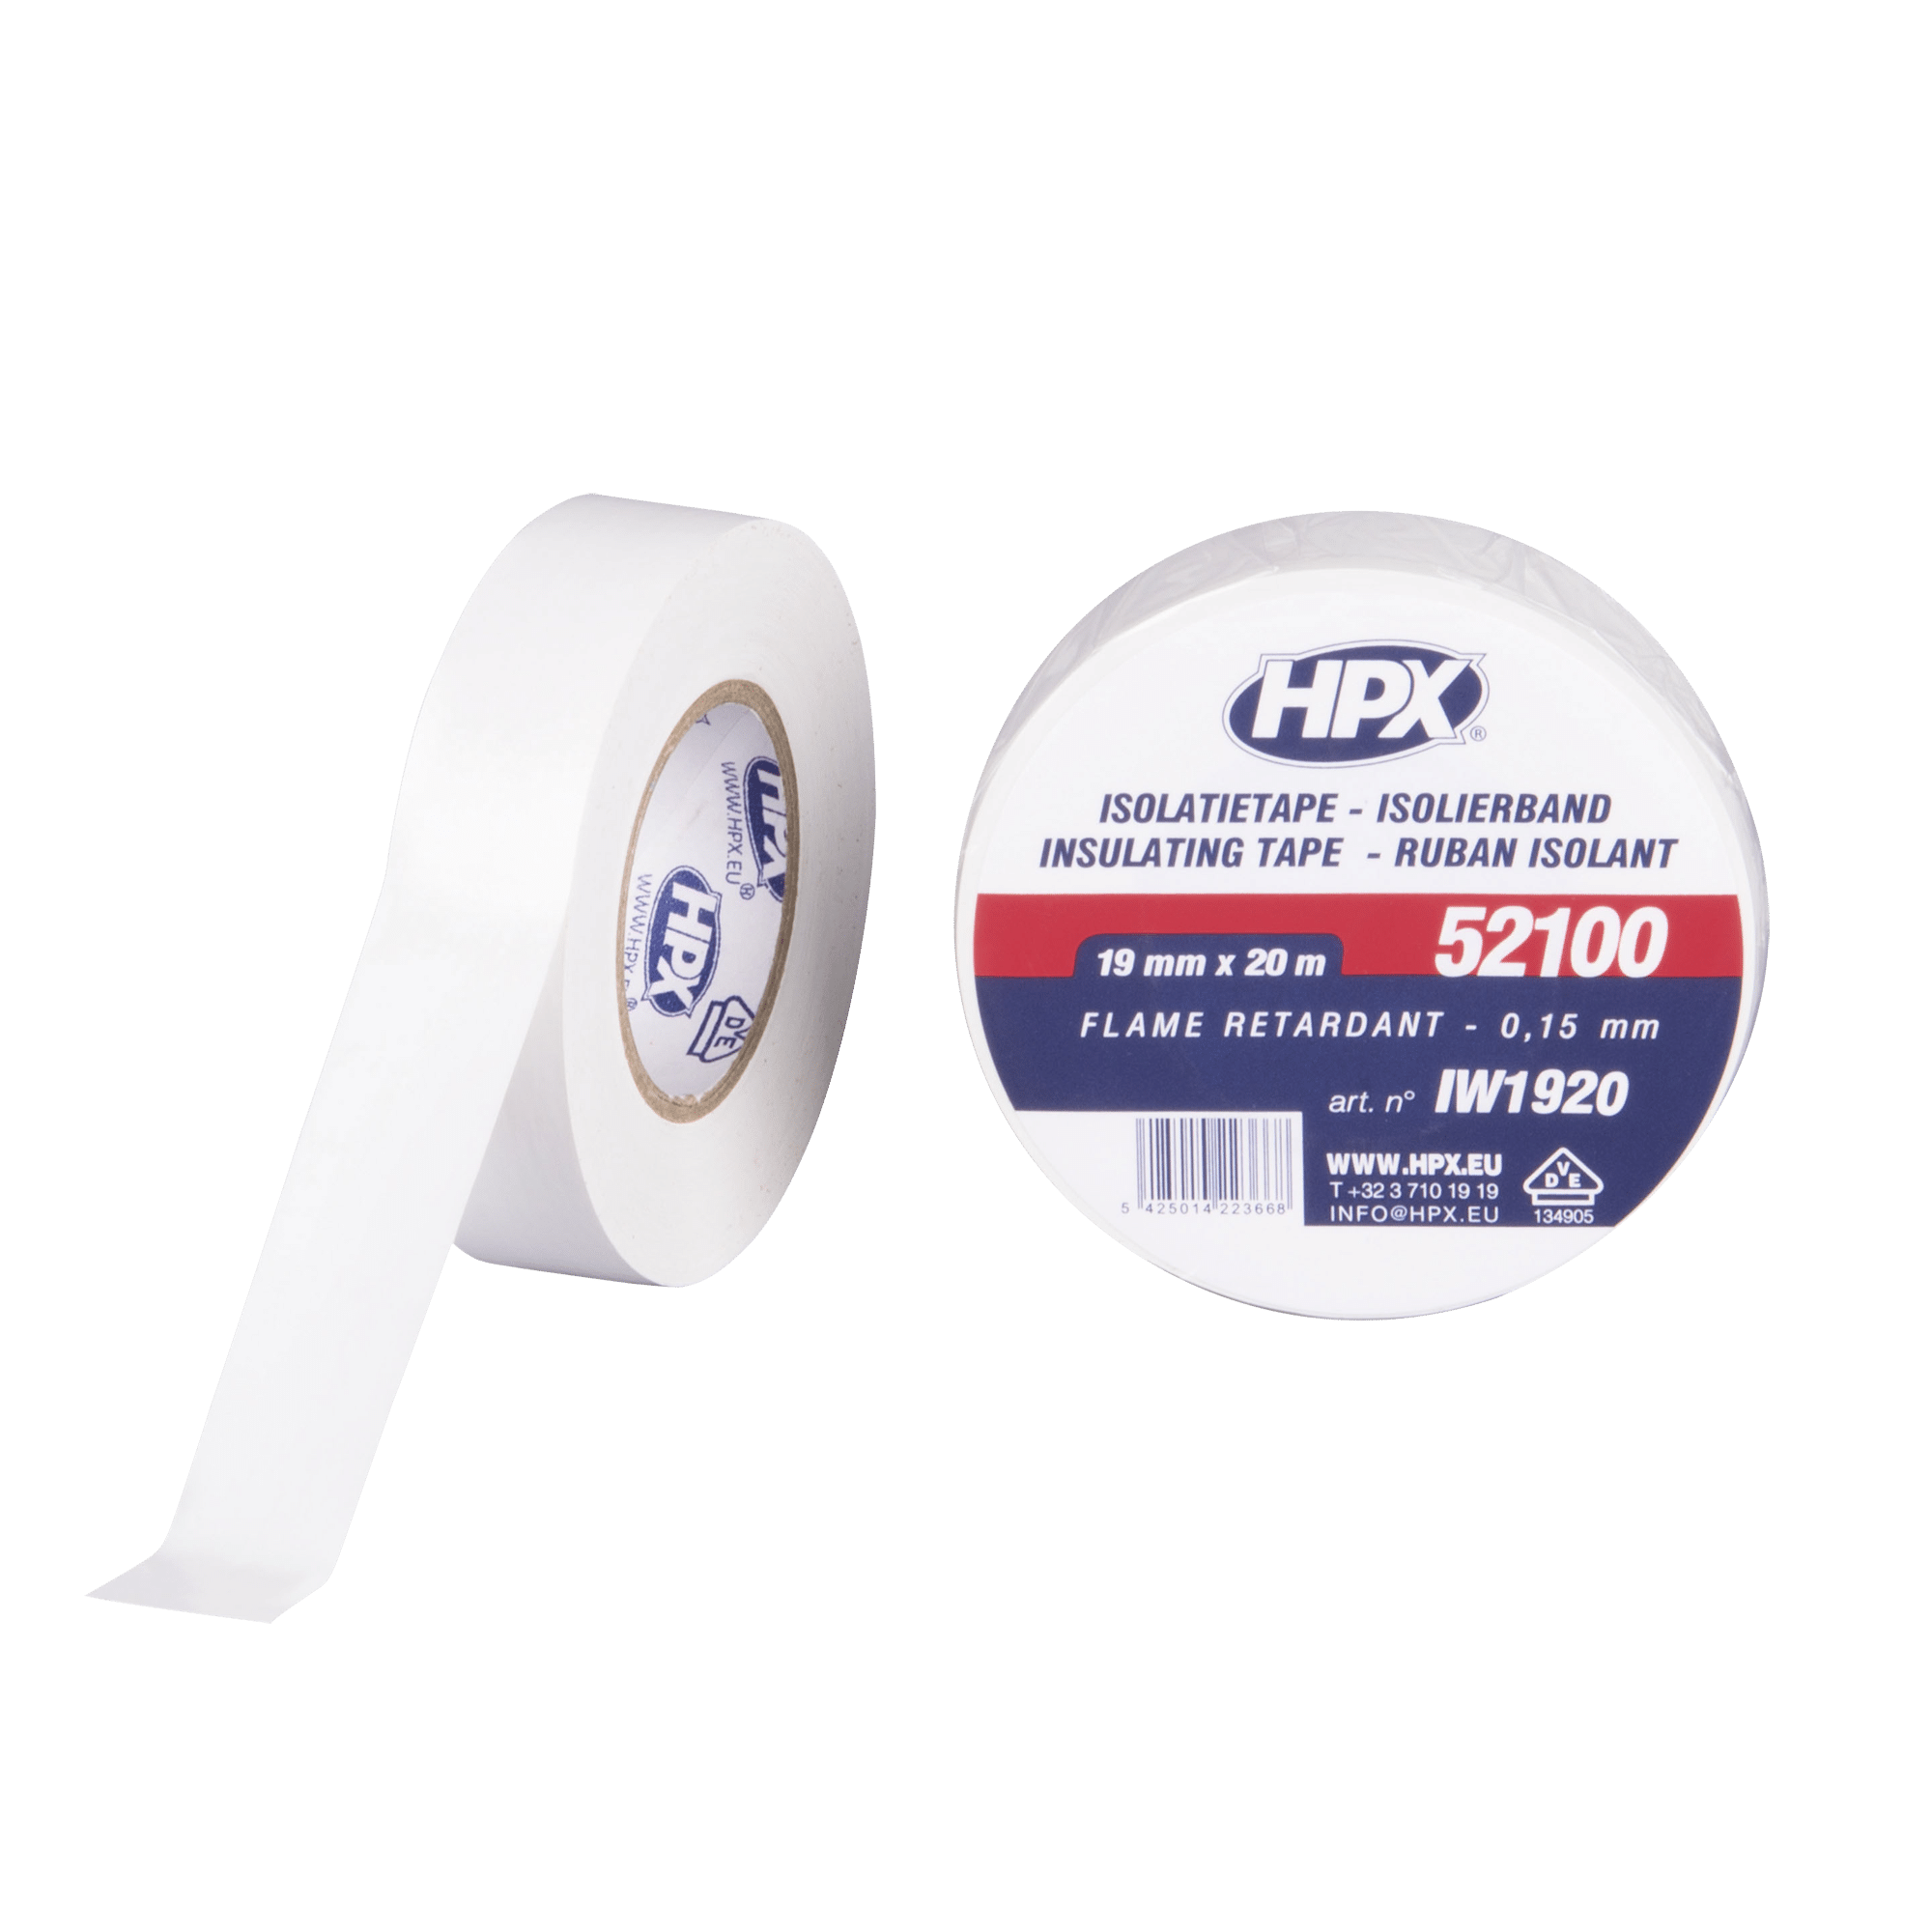 PVC Insulation tape 52100 - Onlinediscowinkel.nl